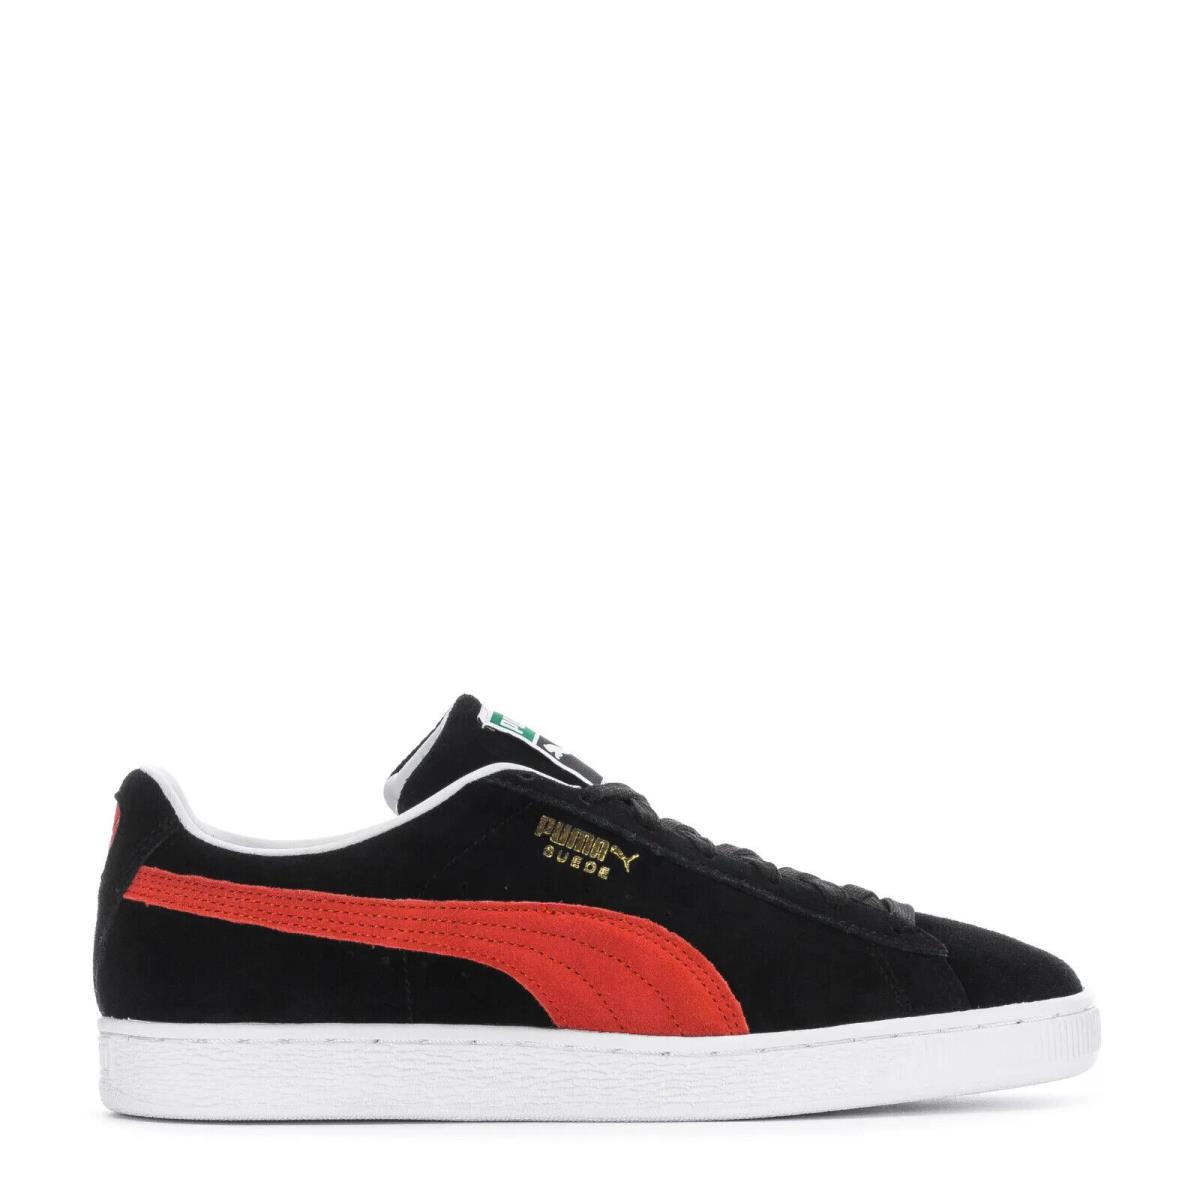 Mens Puma Suede Classic 374915-37 Black/cherry Tomato Shoes